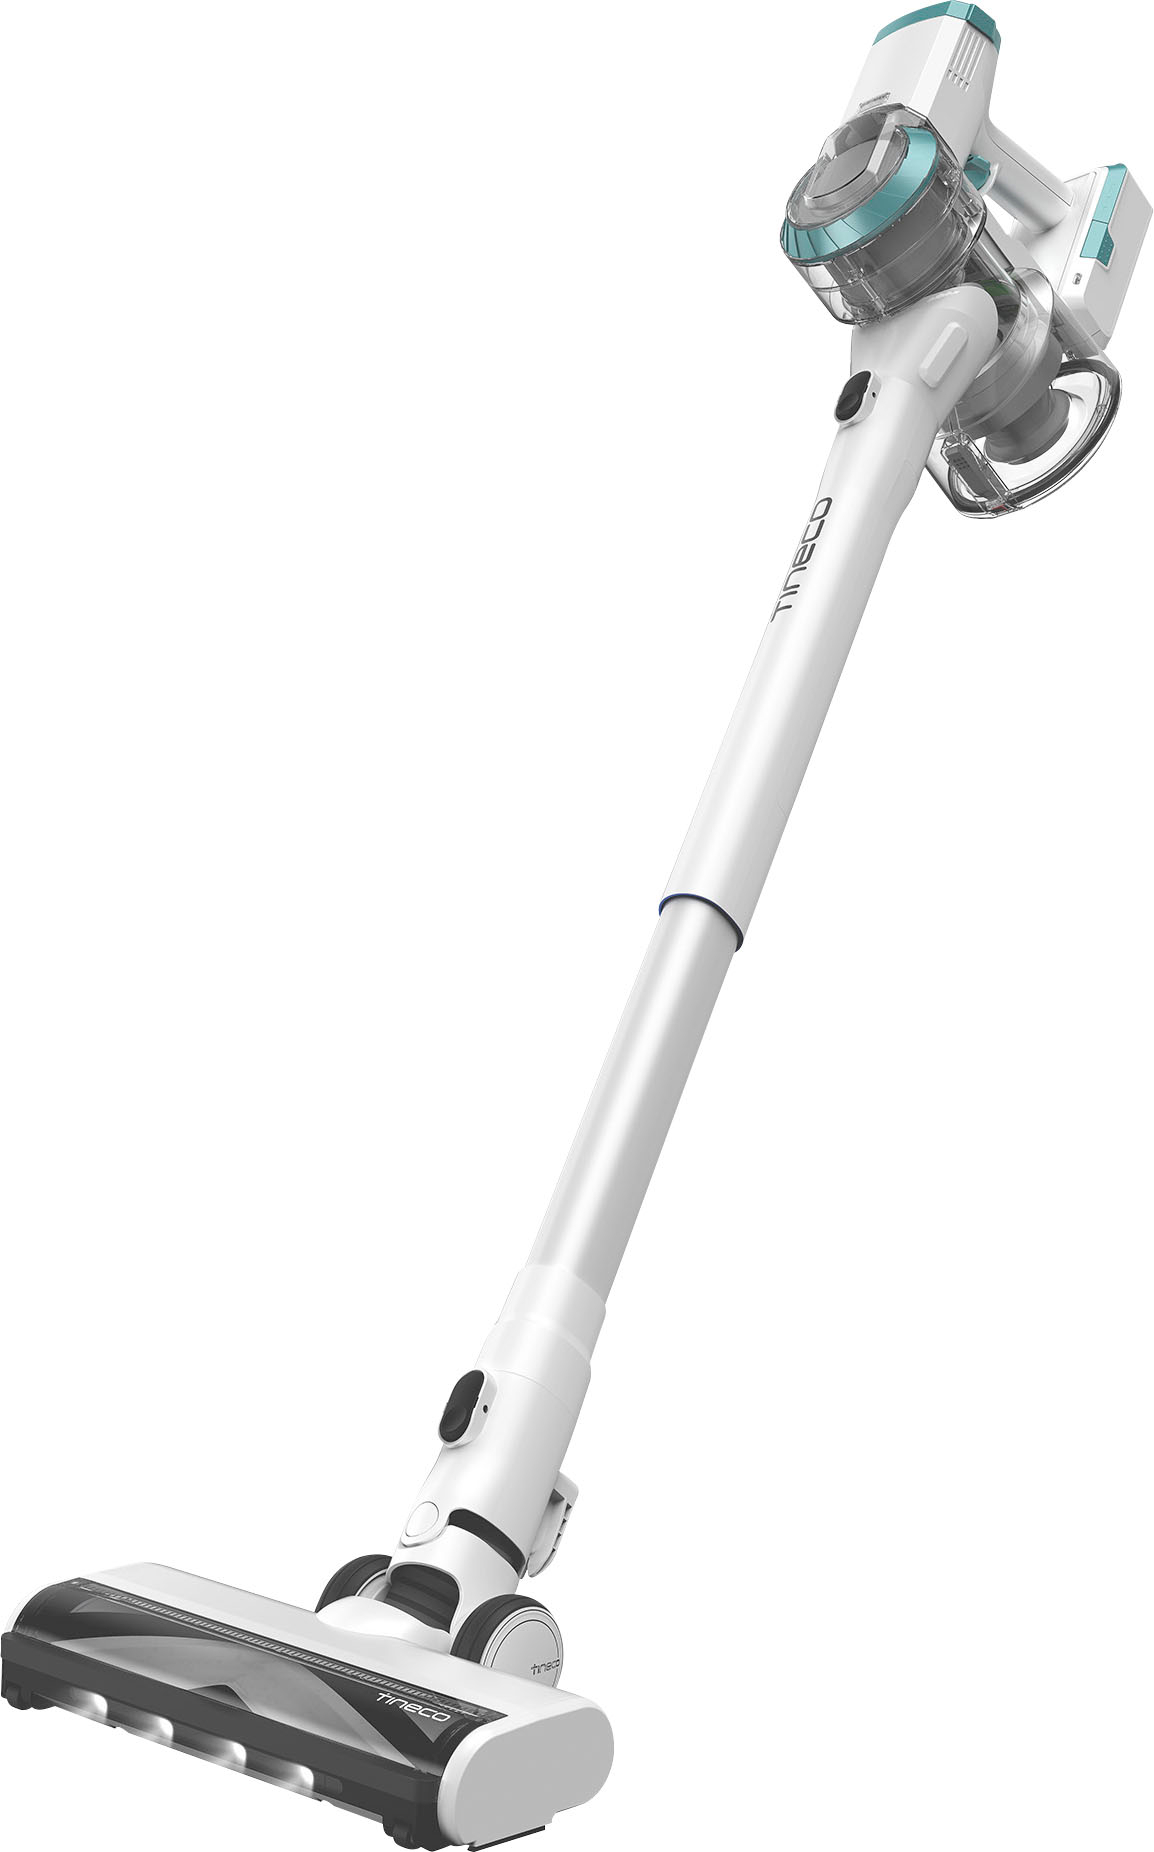 Tineco Pure One S15 Flex Smart Cordless Stick Vacuum